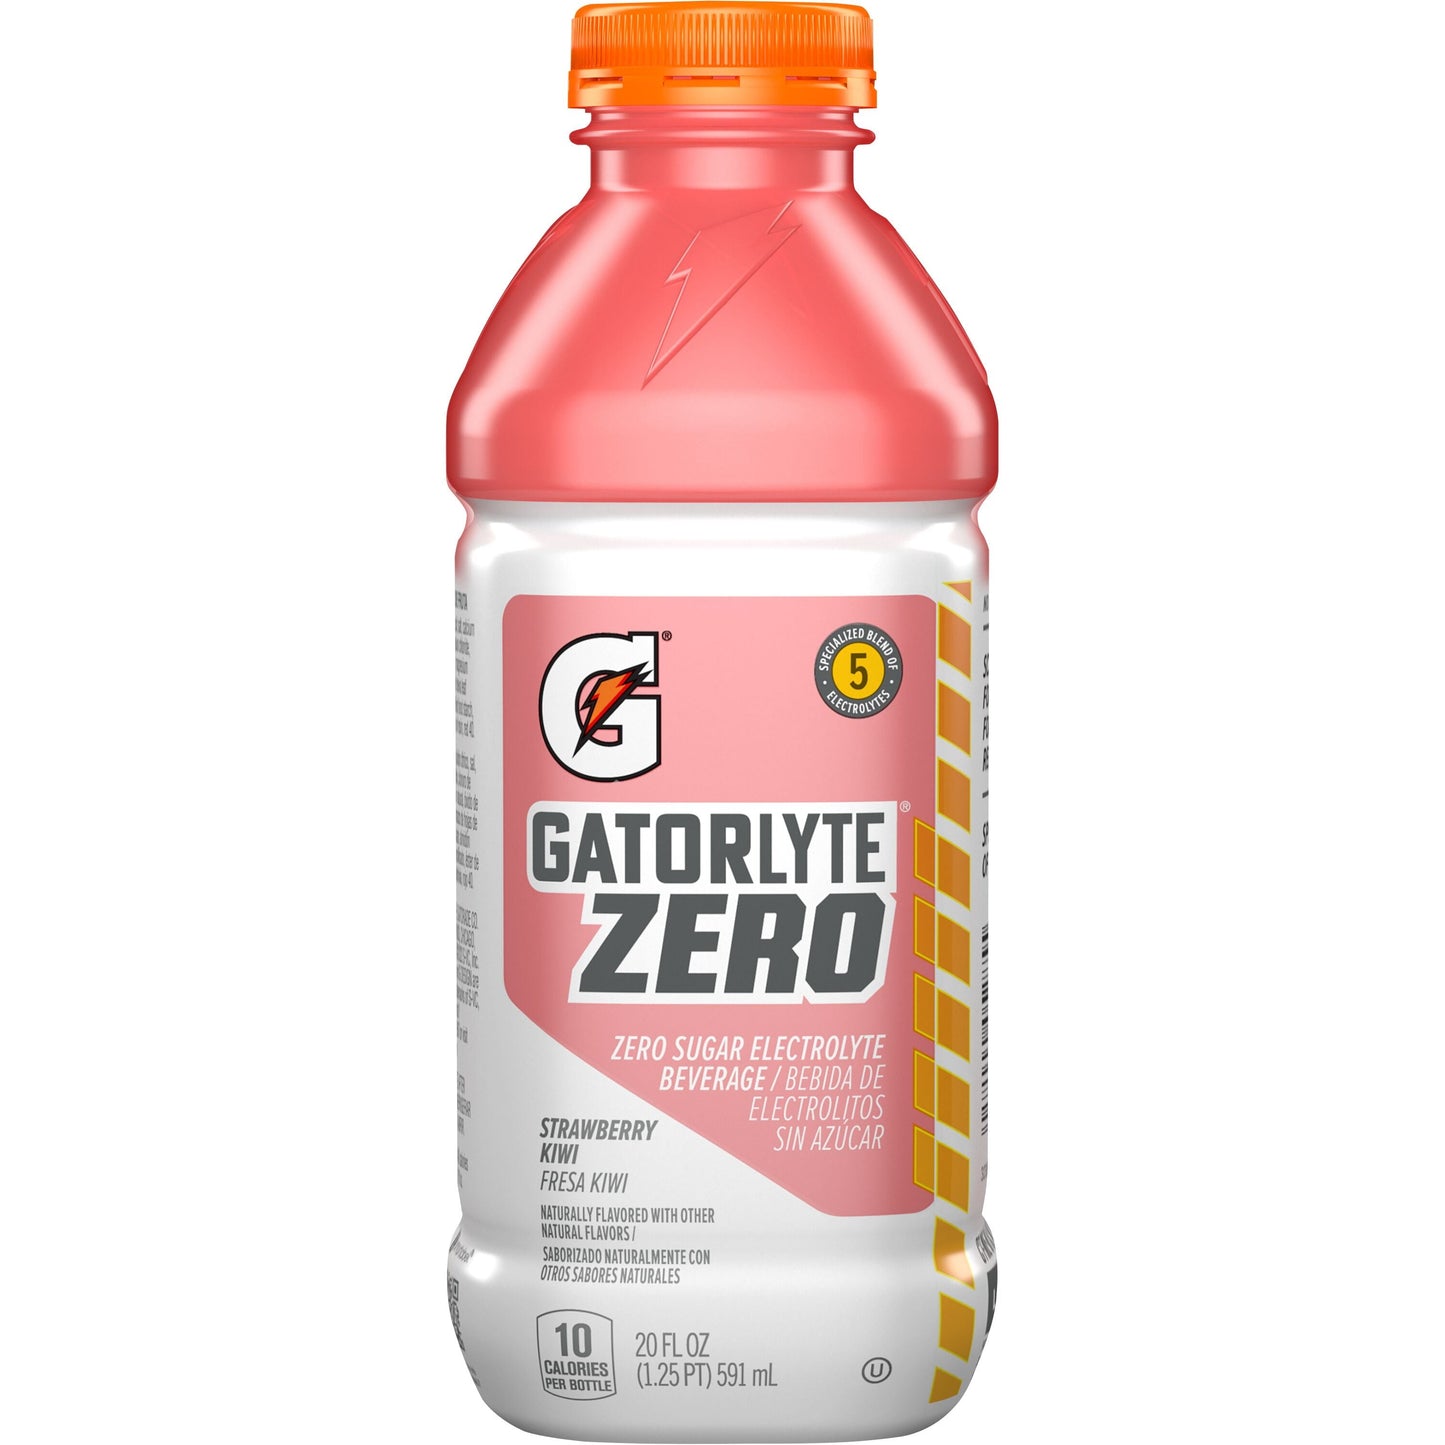 Gatorade, Gatorlyte Zero Electrolyte Beverage, Strawberry Kiwi, 20 oz Bottle